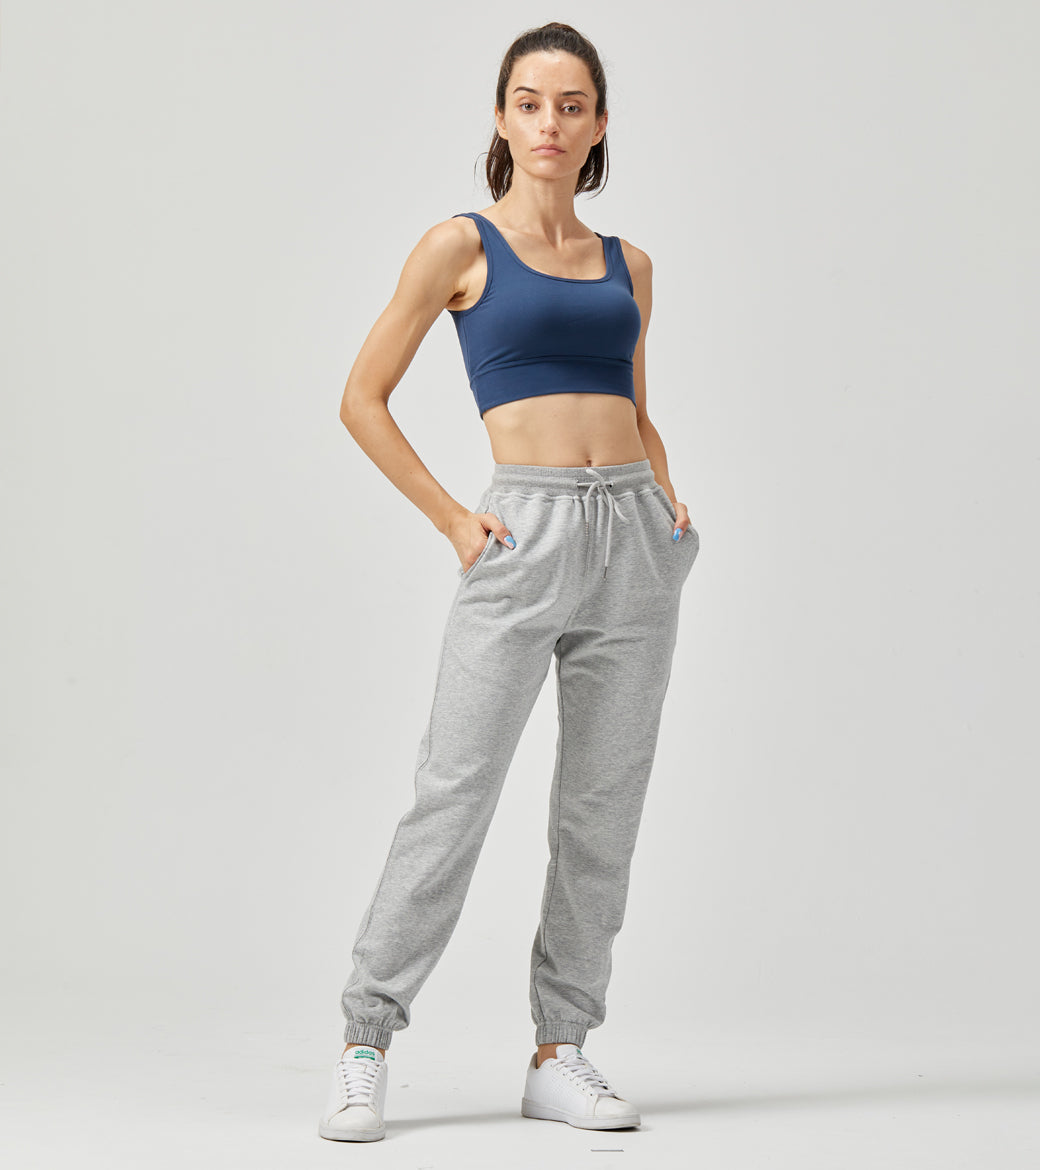 LOVESOFT Women's Cotton Sweatpants Baggy Jogging High Waist Belt Pockets